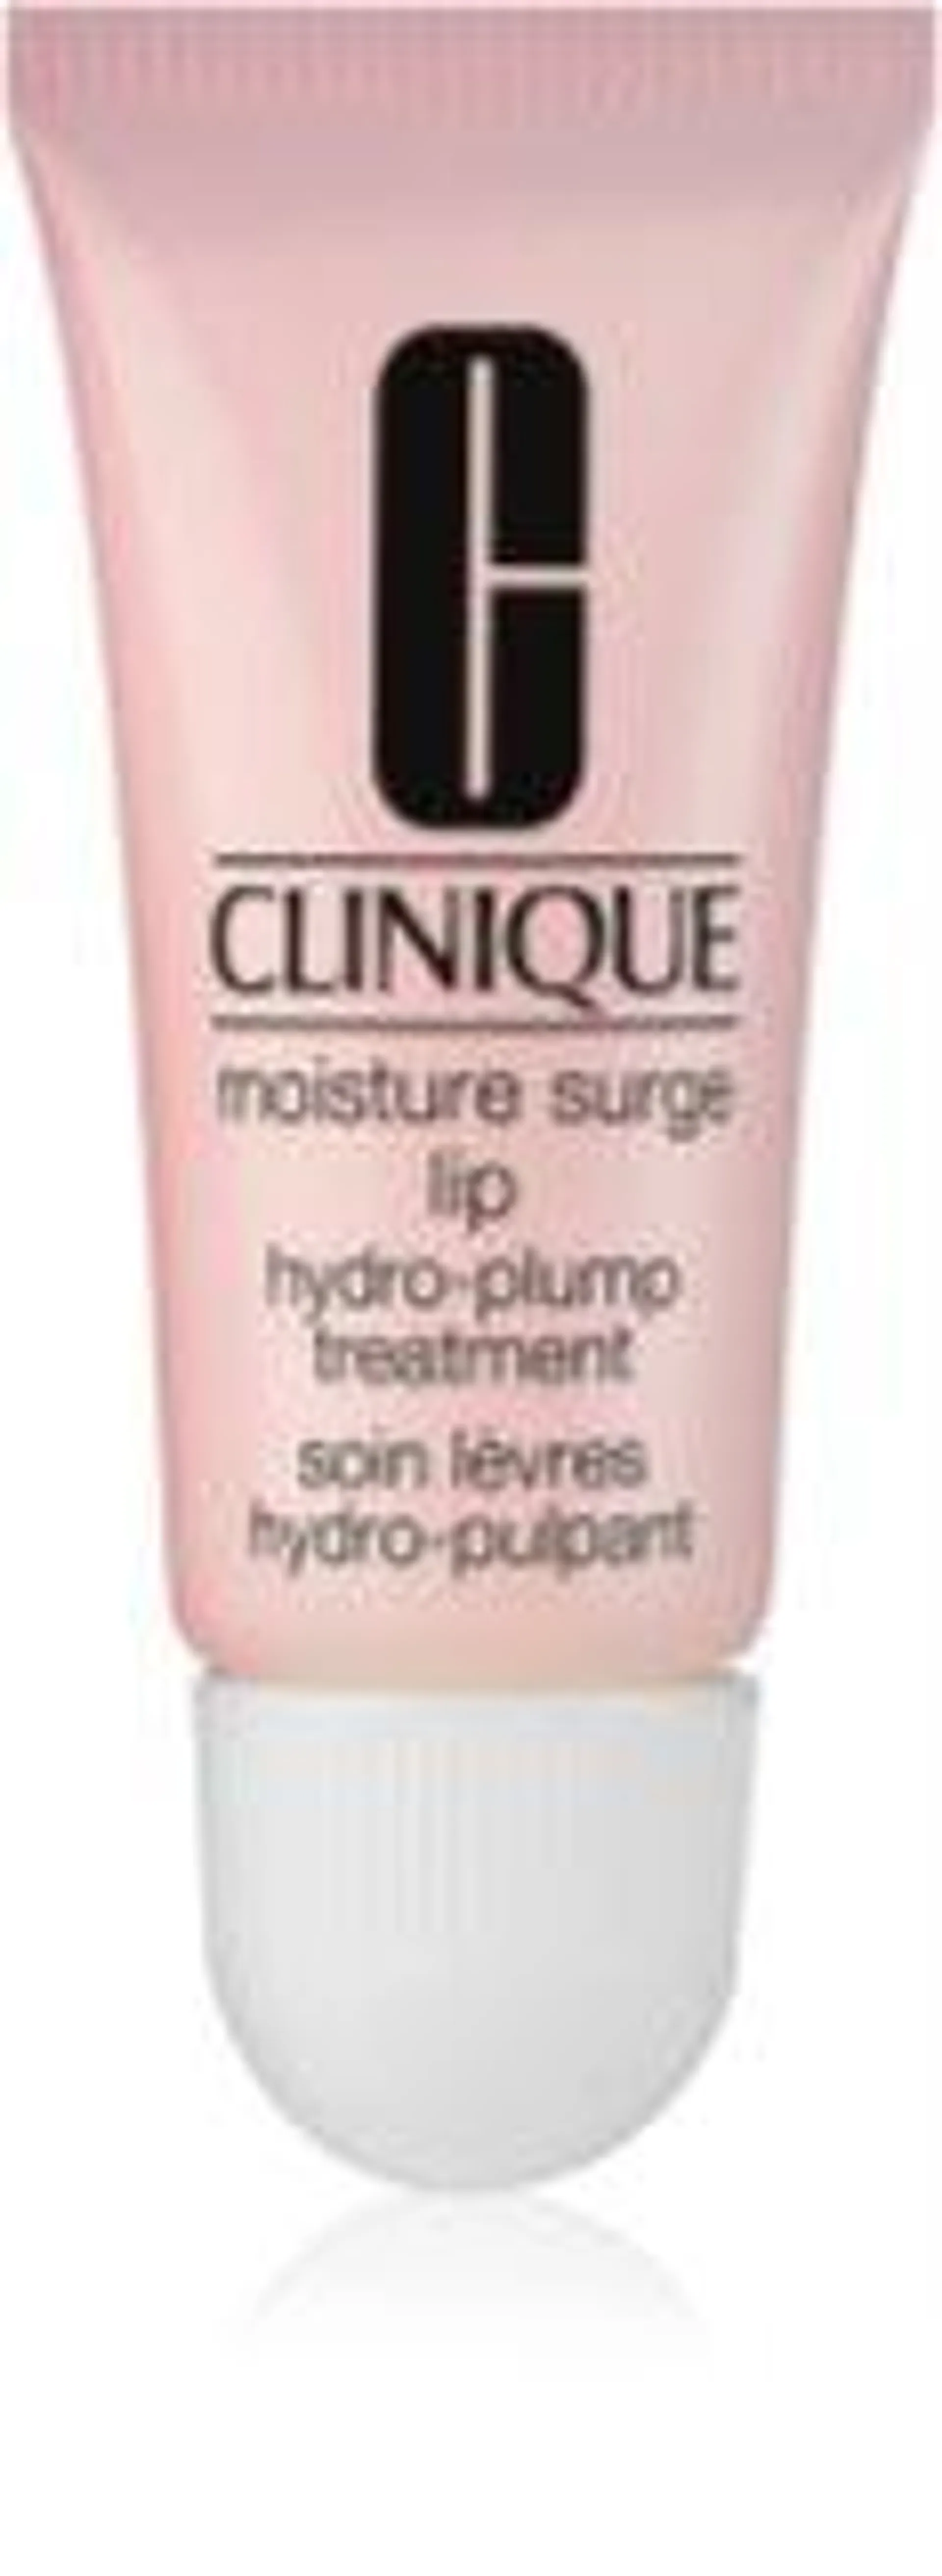 Moisture Surge™ Lip Hydro-Plump Treatment